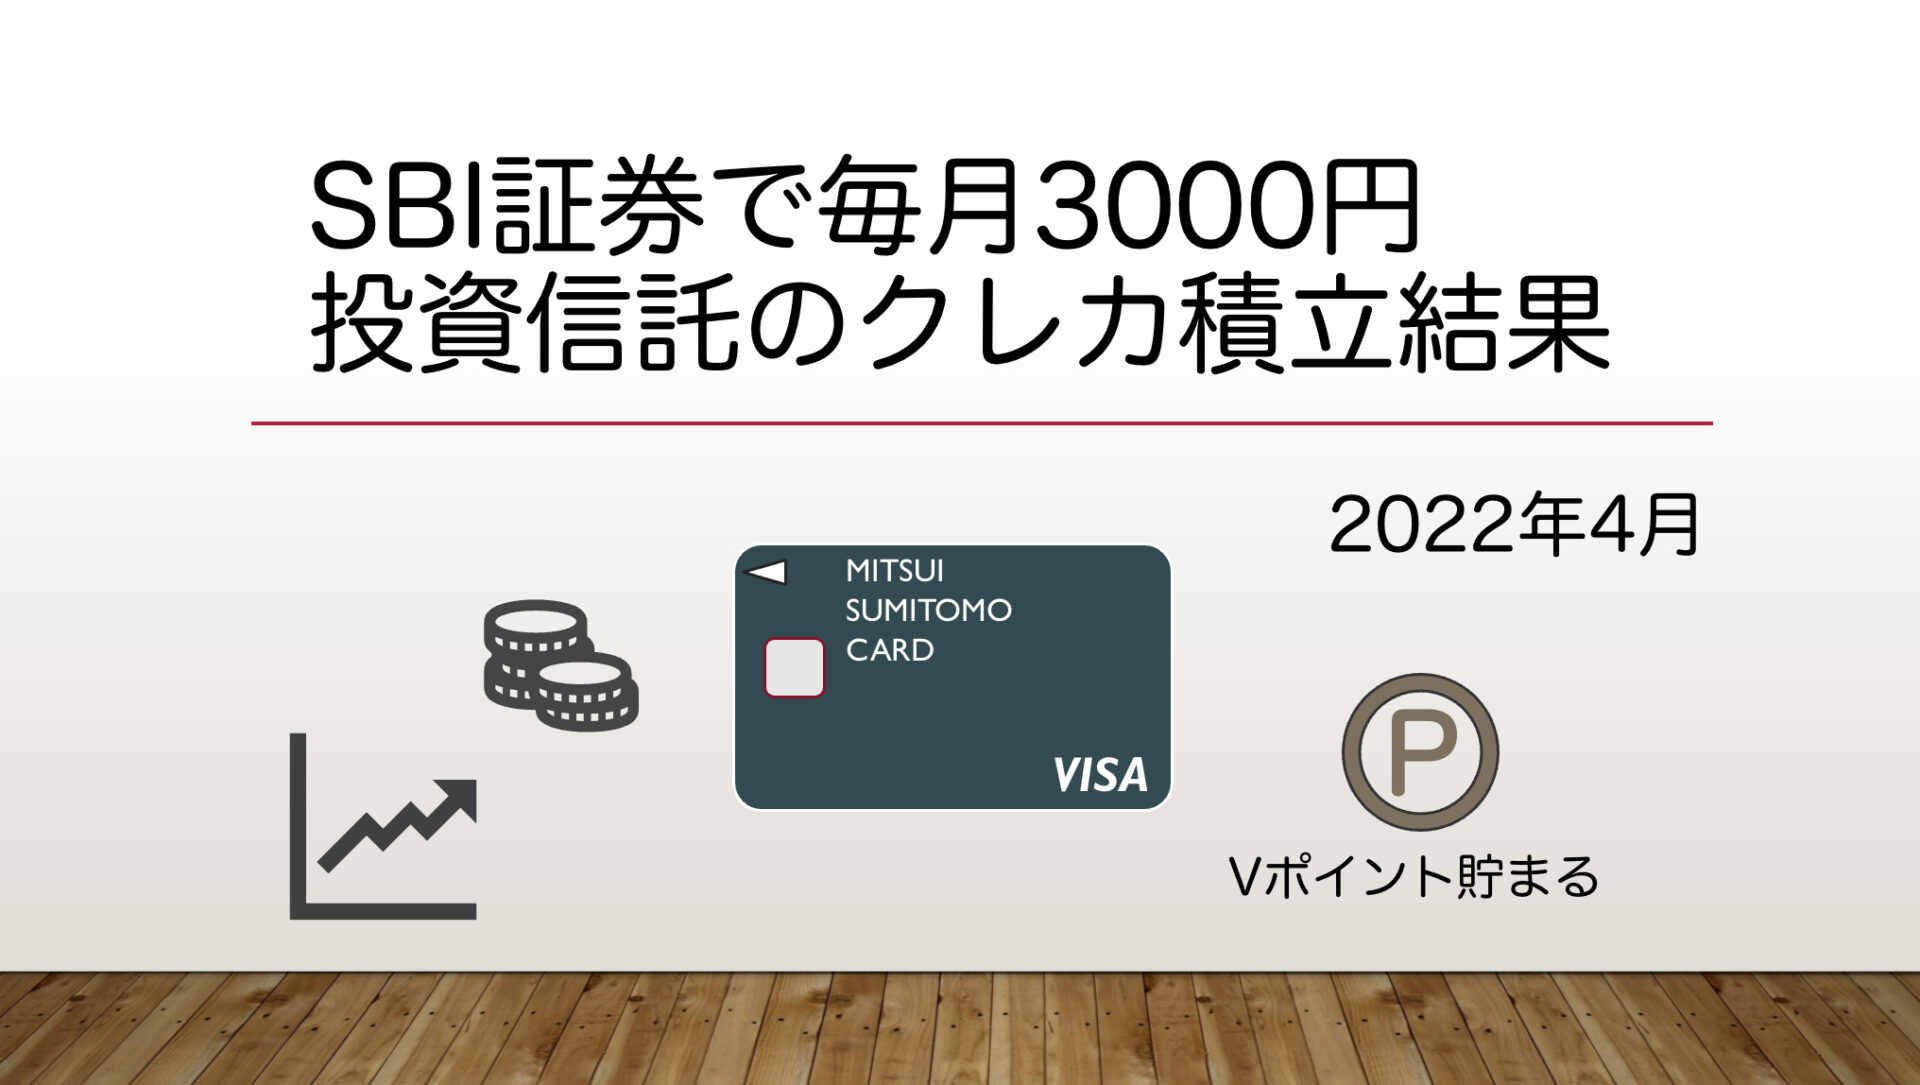 【SBI証券】三井住友カードによる投資信託のクレカ積立結果【2022年4月】